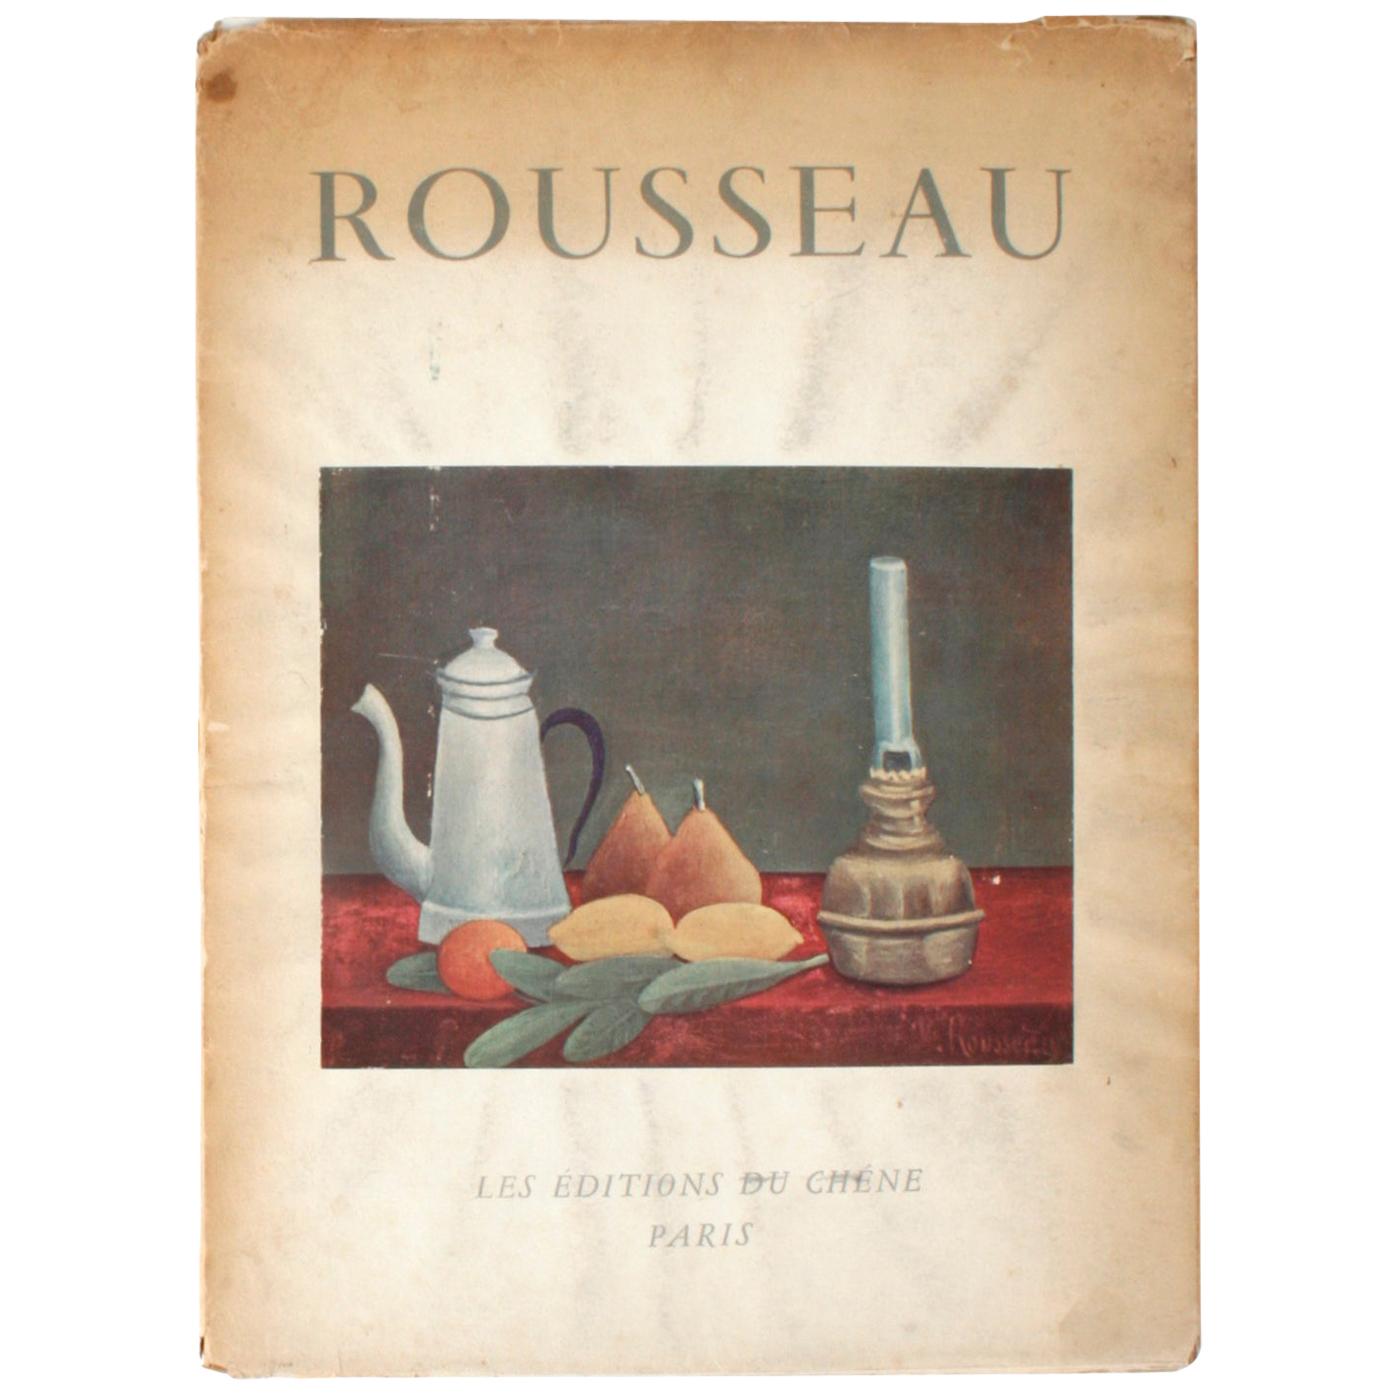 Henri Rousseau dit Le Douanier by Jean-Marie Lo Duca, First Edition